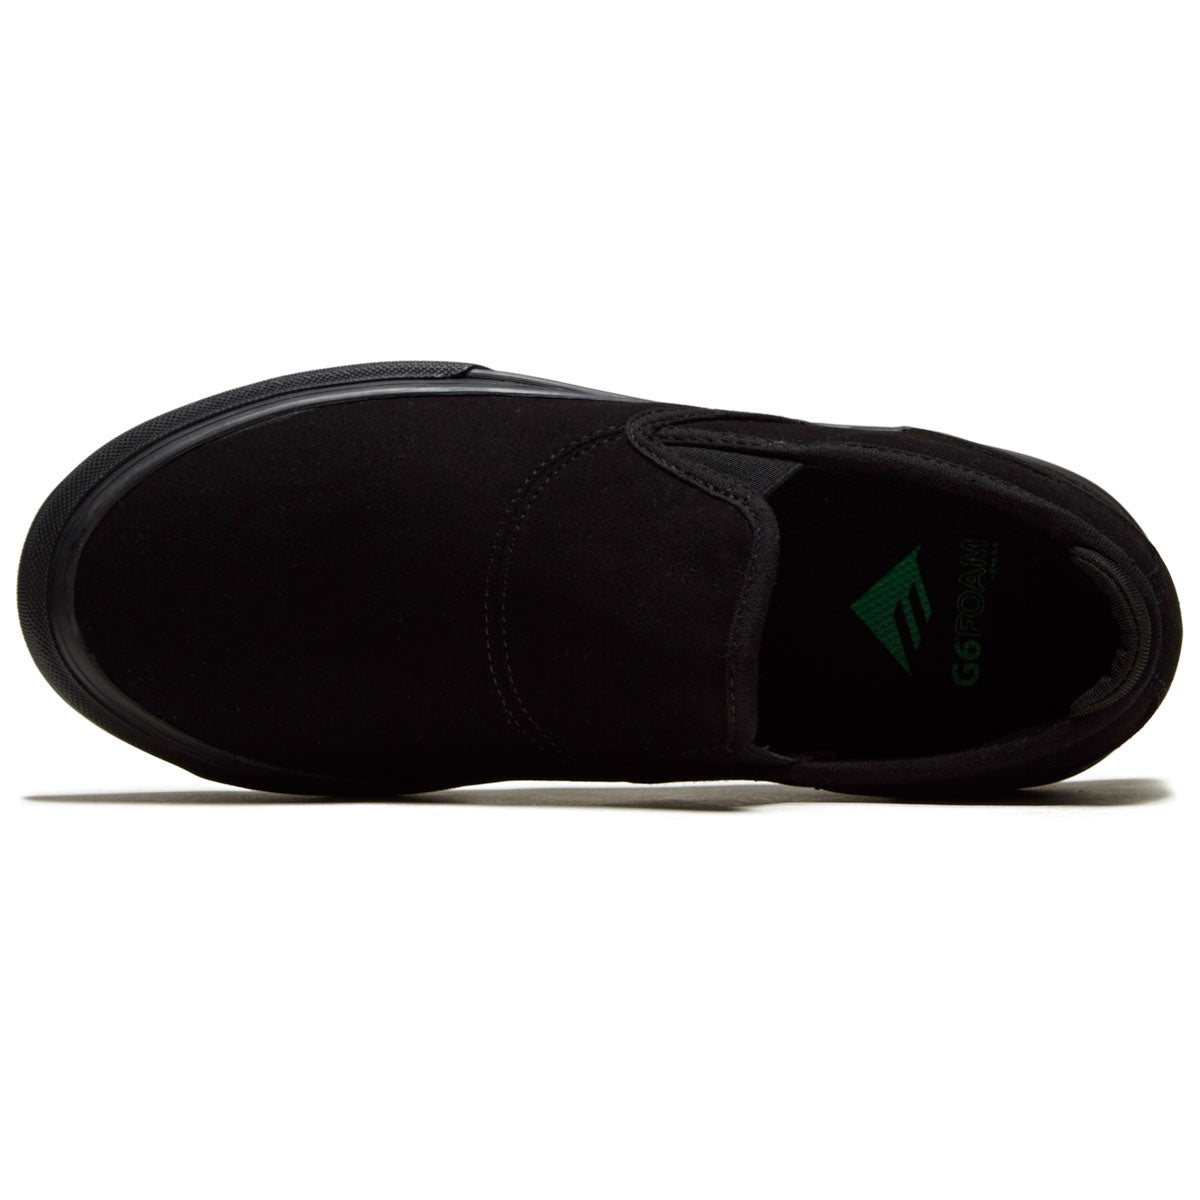 Emerica Wino G6 Slip-on Shoes - Black image 3